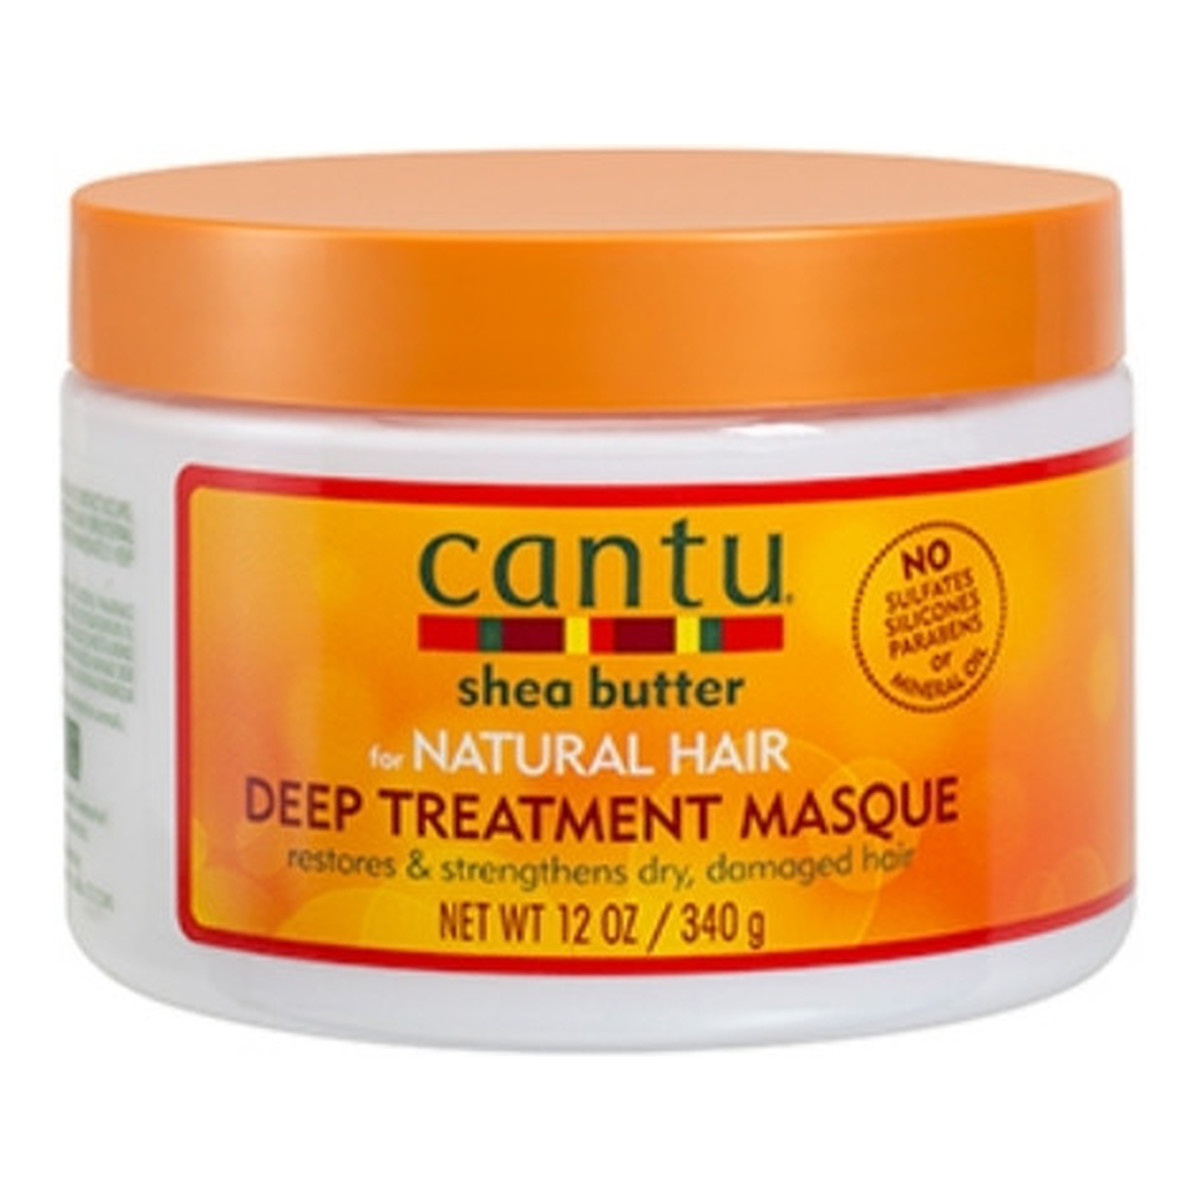 Cantu Shea Butter Natural Deep Treatment Masque Maska odbudowująca włosy 340ml